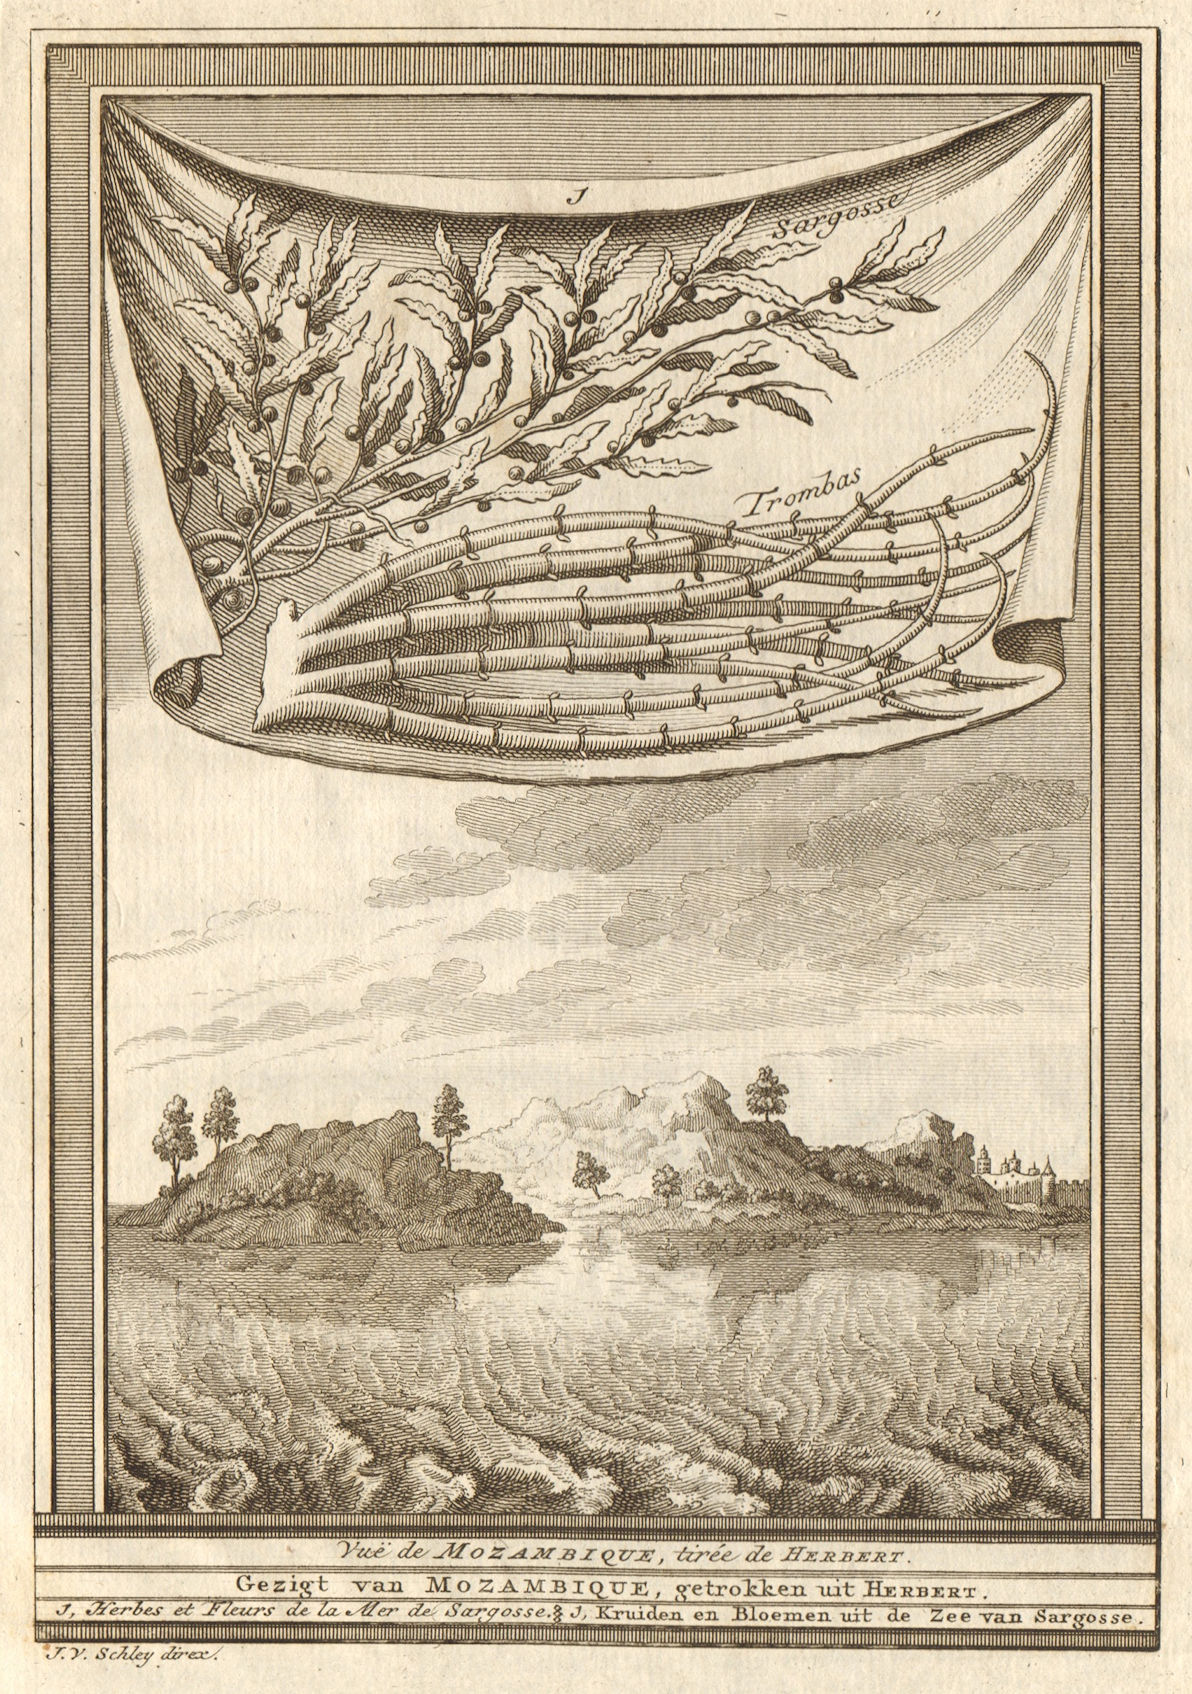 Associate Product 'Vue de Mozambique'. View of Mozambique island, from Herbert. SCHLEY 1747